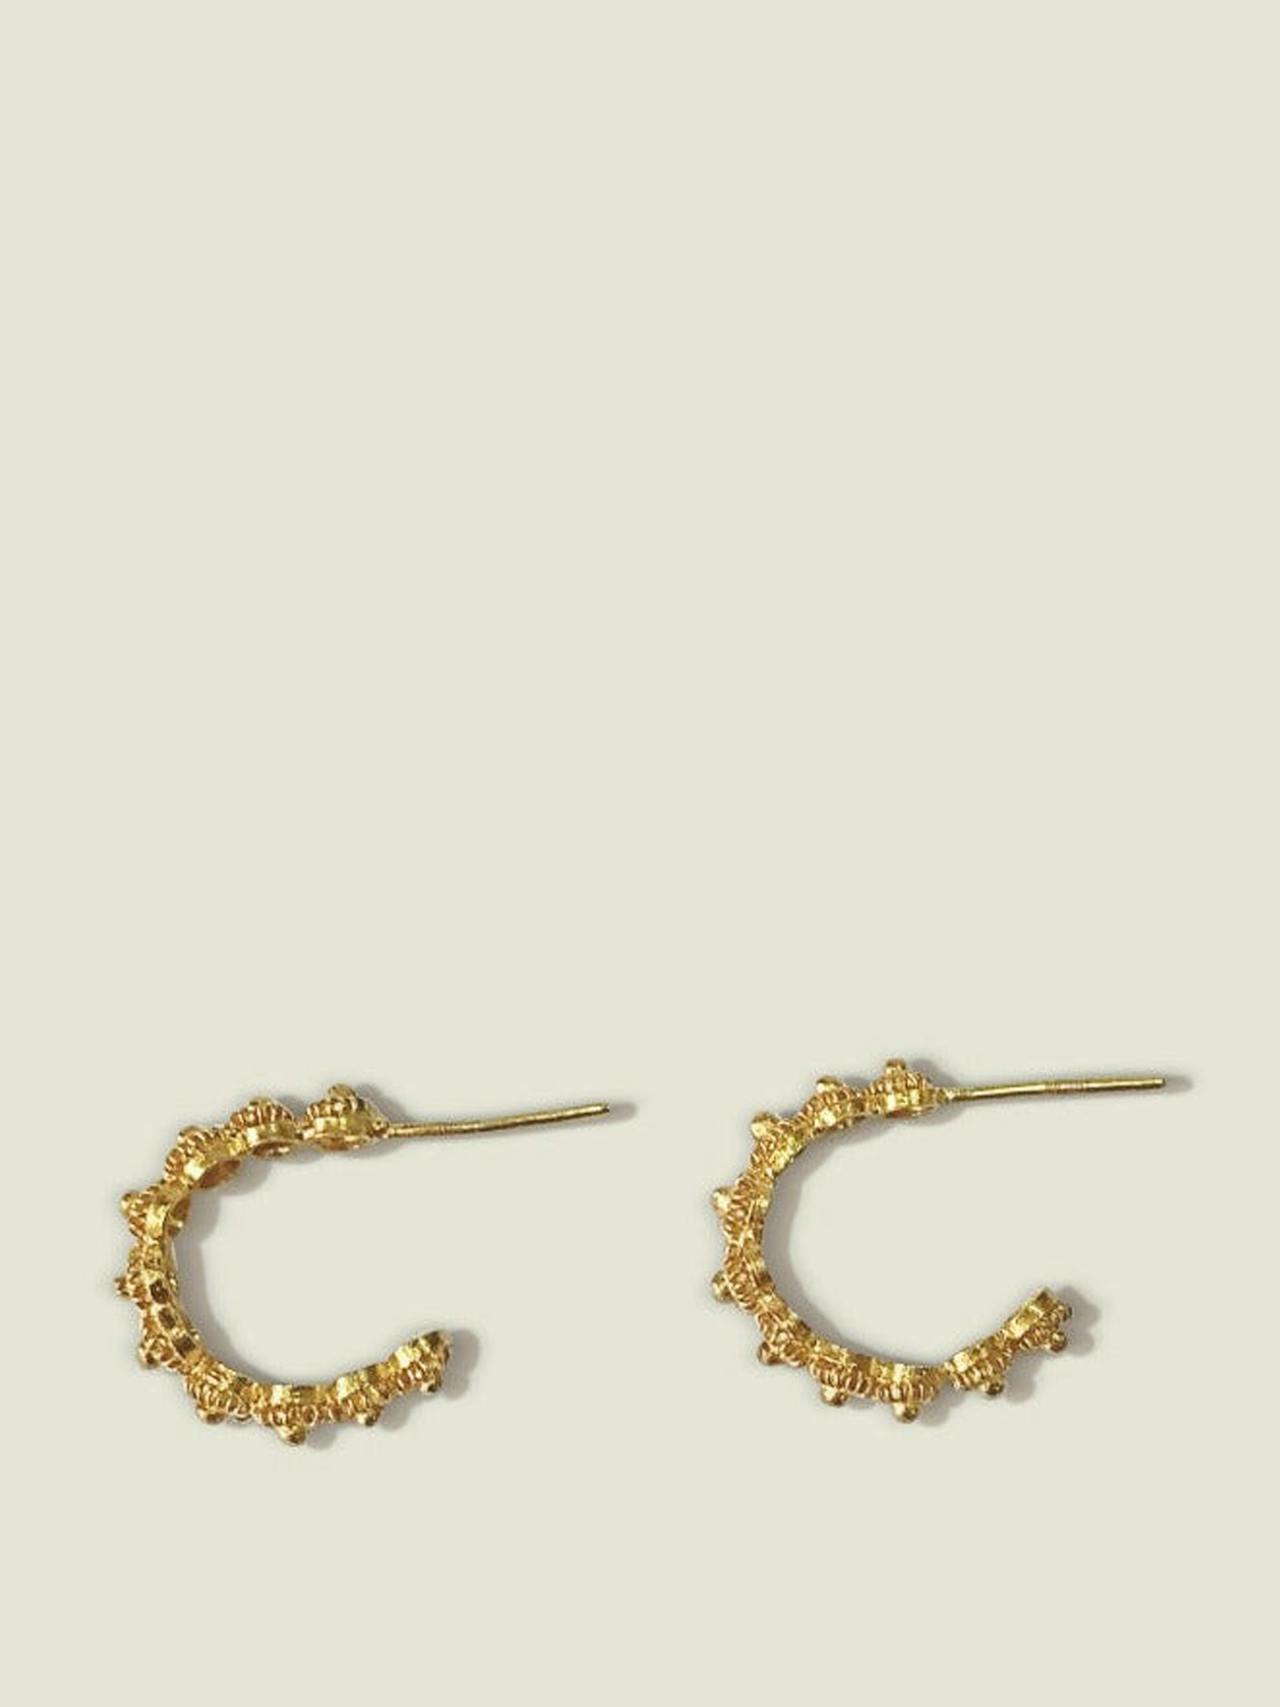 Small gold/silver hoop earrings